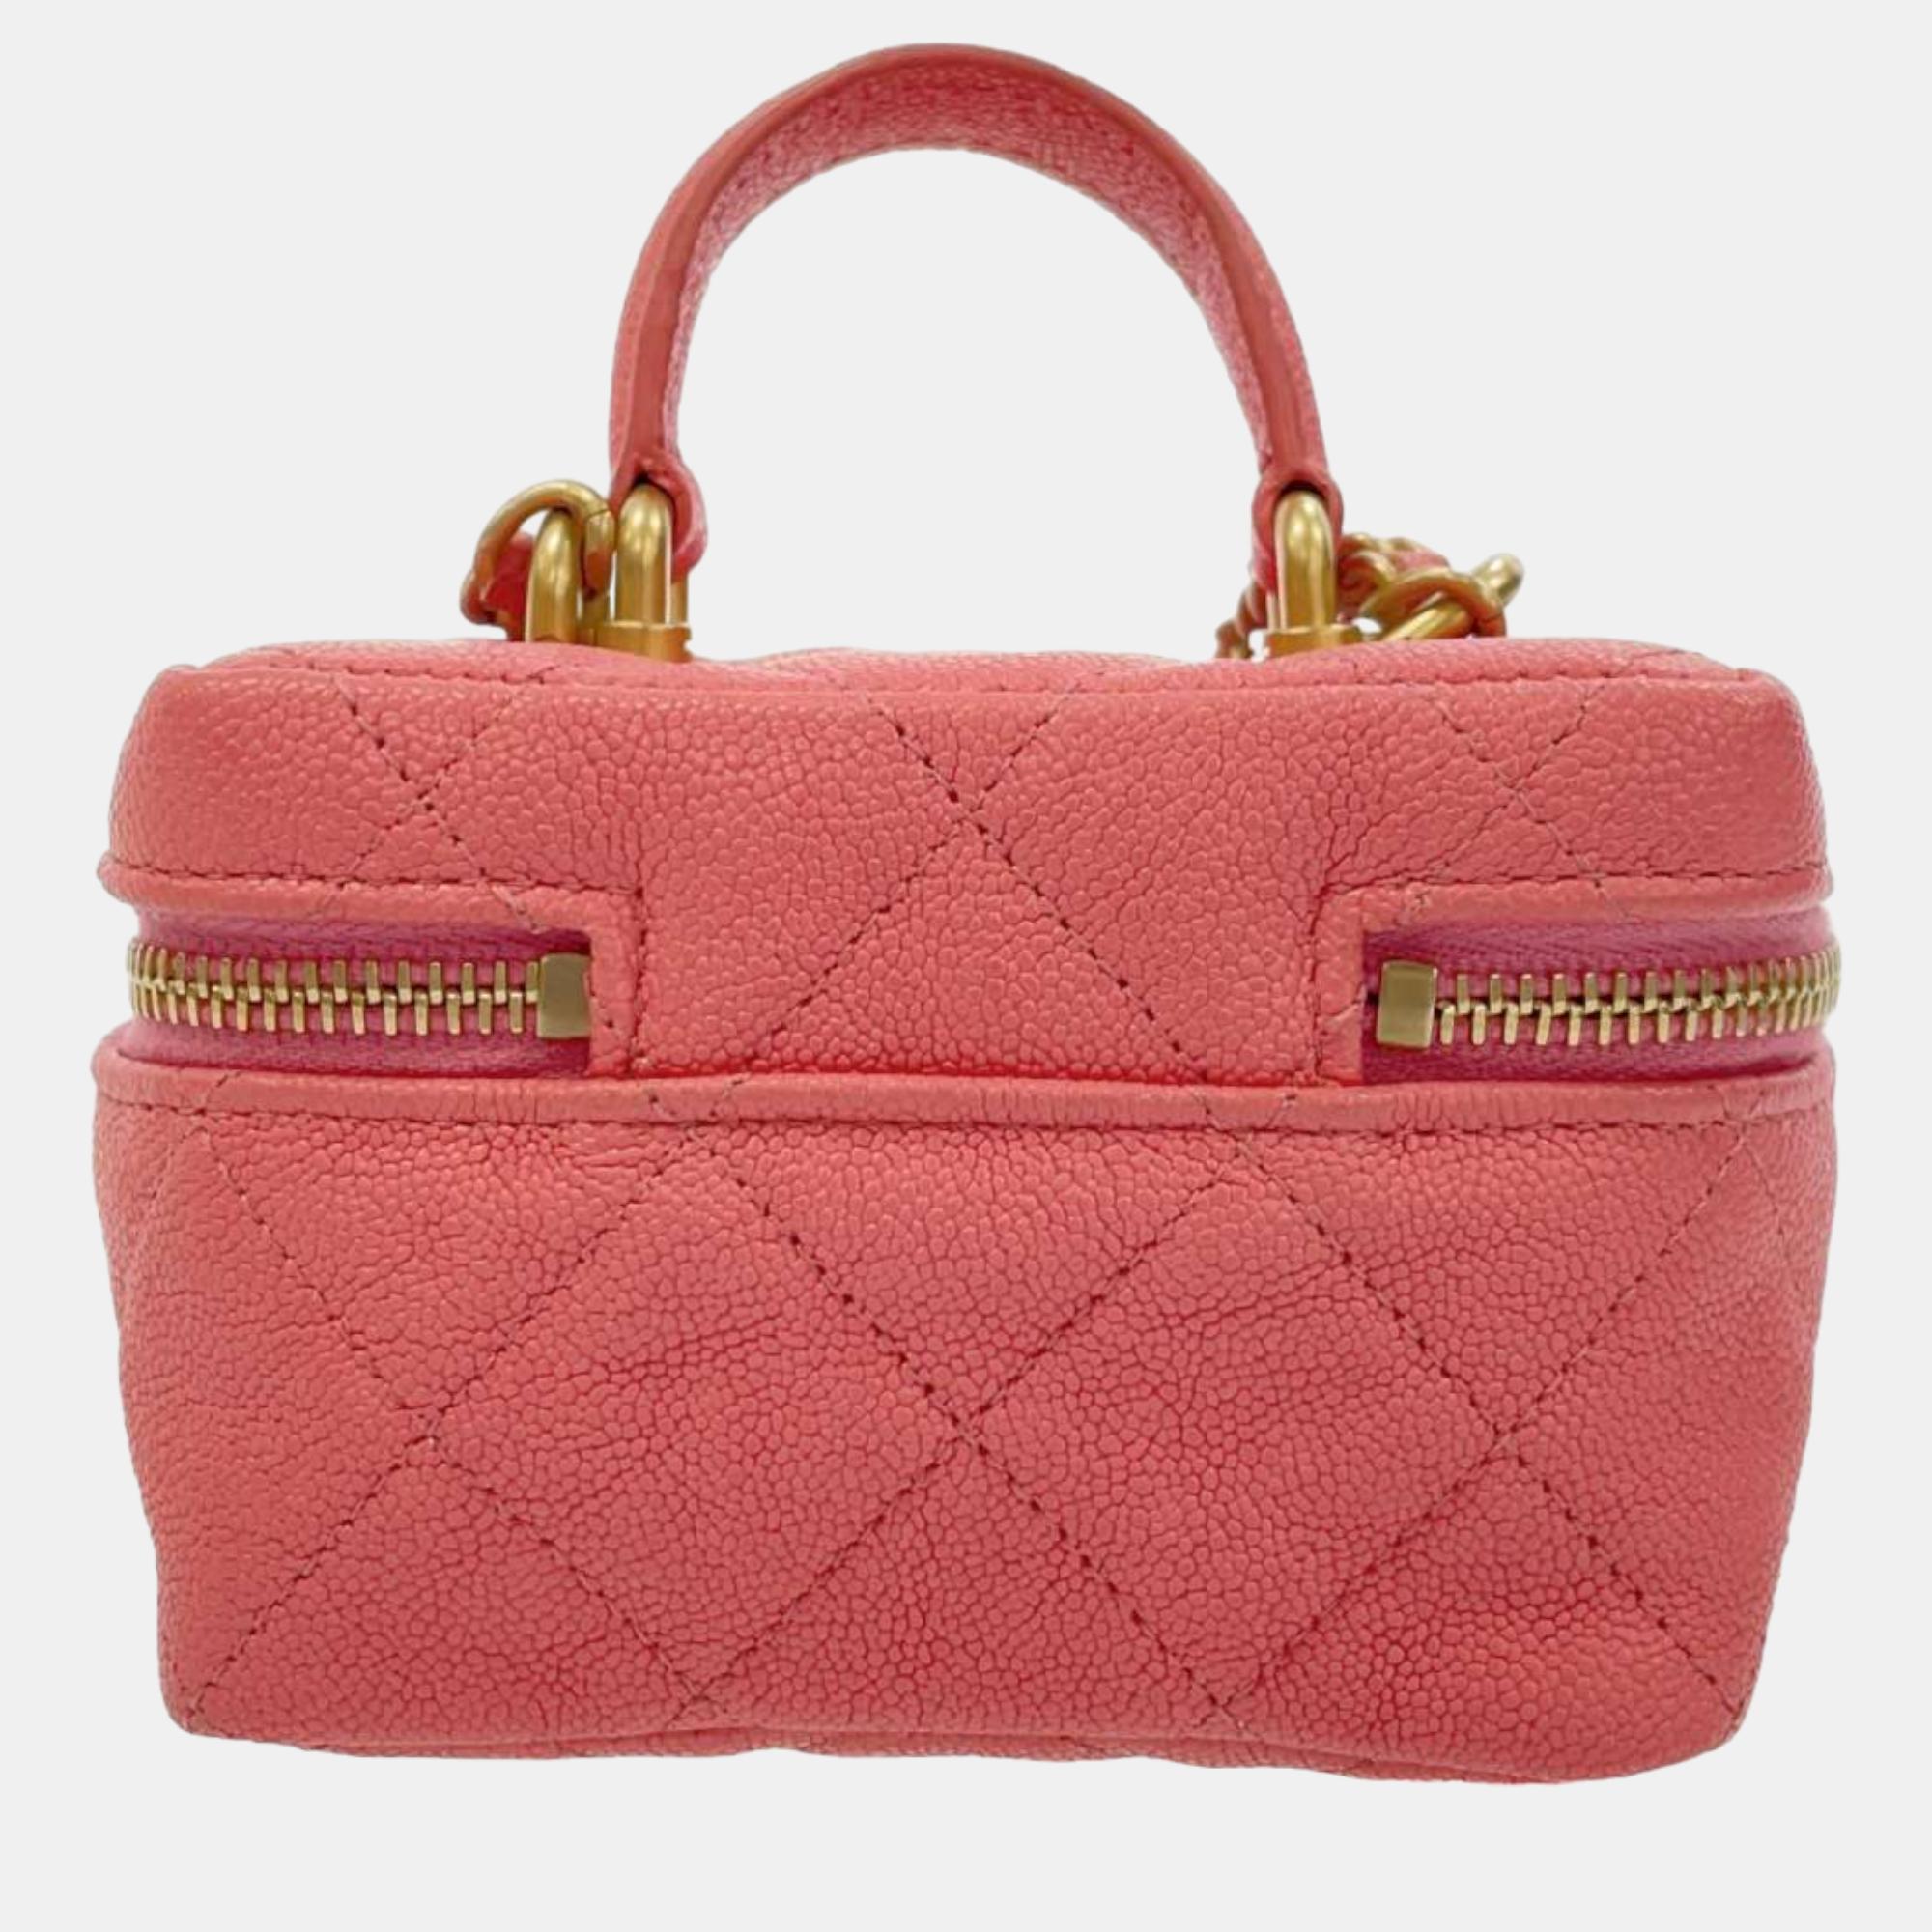 Chanel Pink Leather Mini Vanity Case